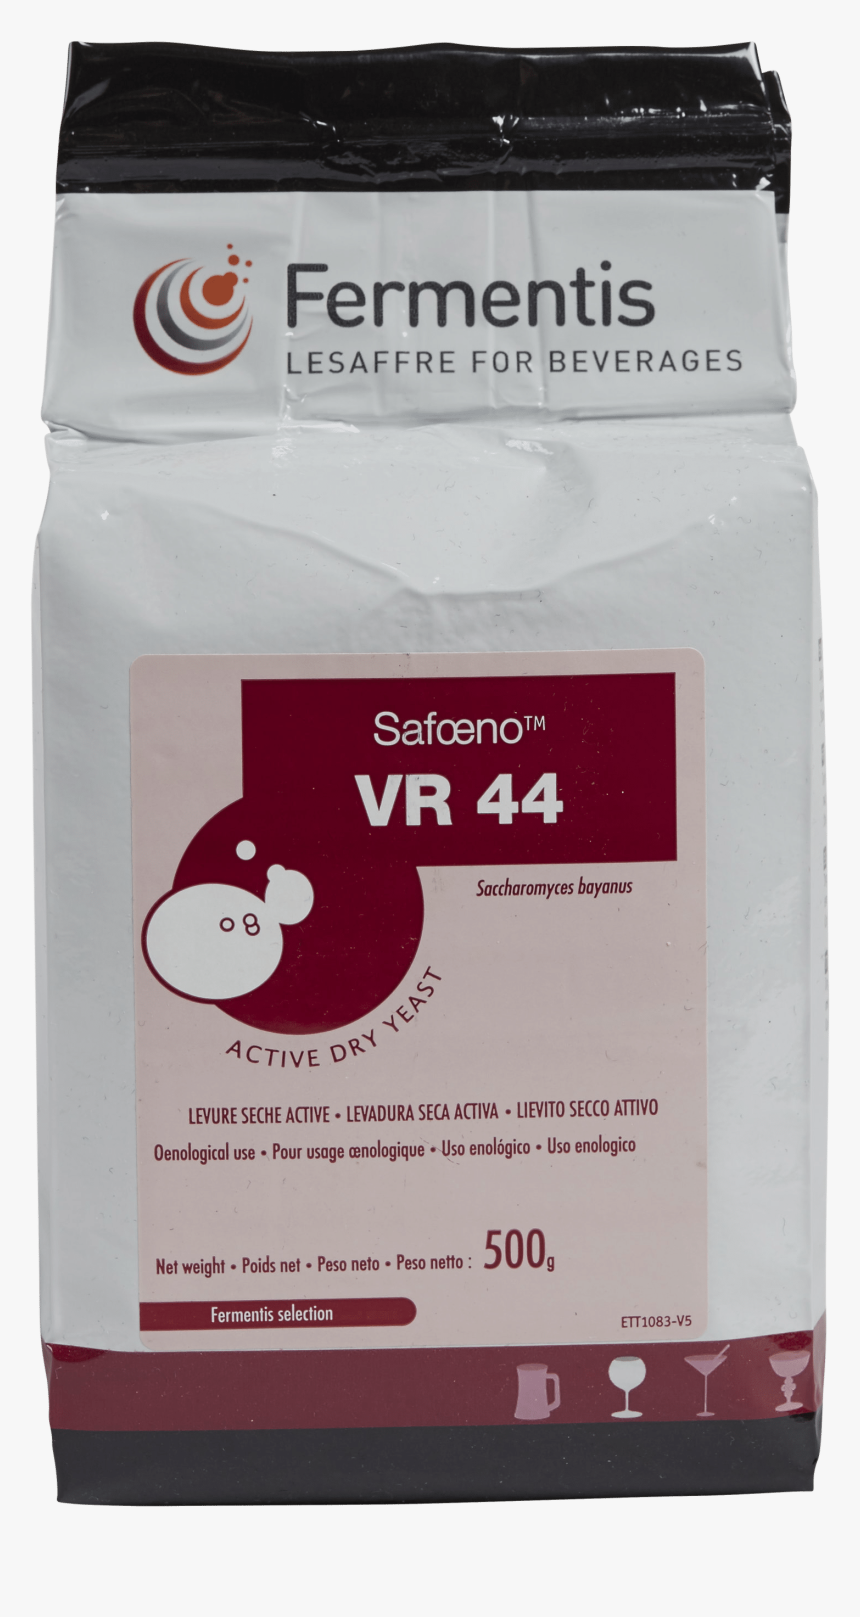 Safoenovr44 Fermentis Yeast - Fermentis, HD Png Download, Free Download